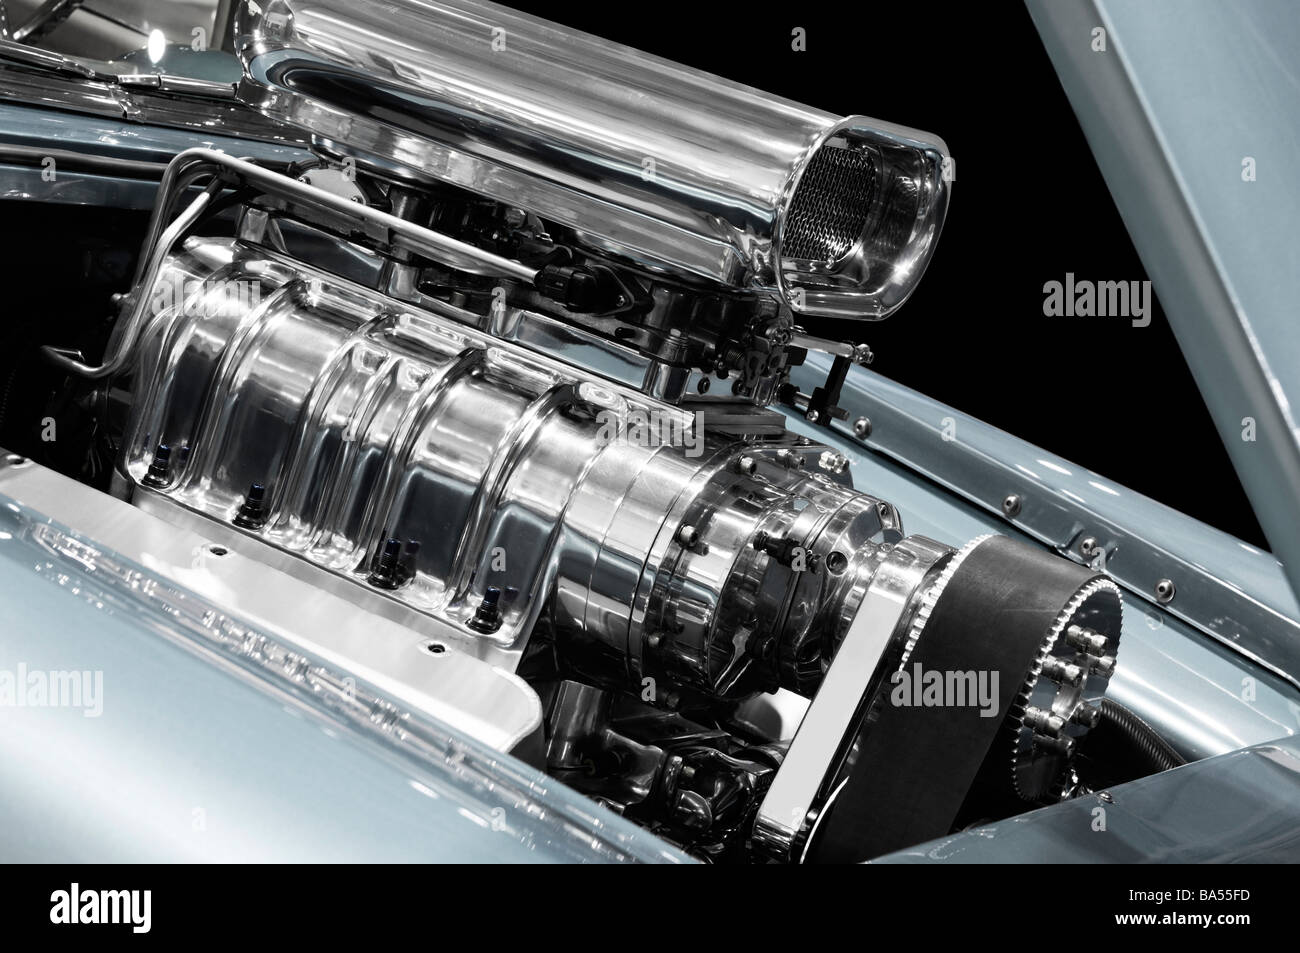 Powerful custom car engine Stock Photo